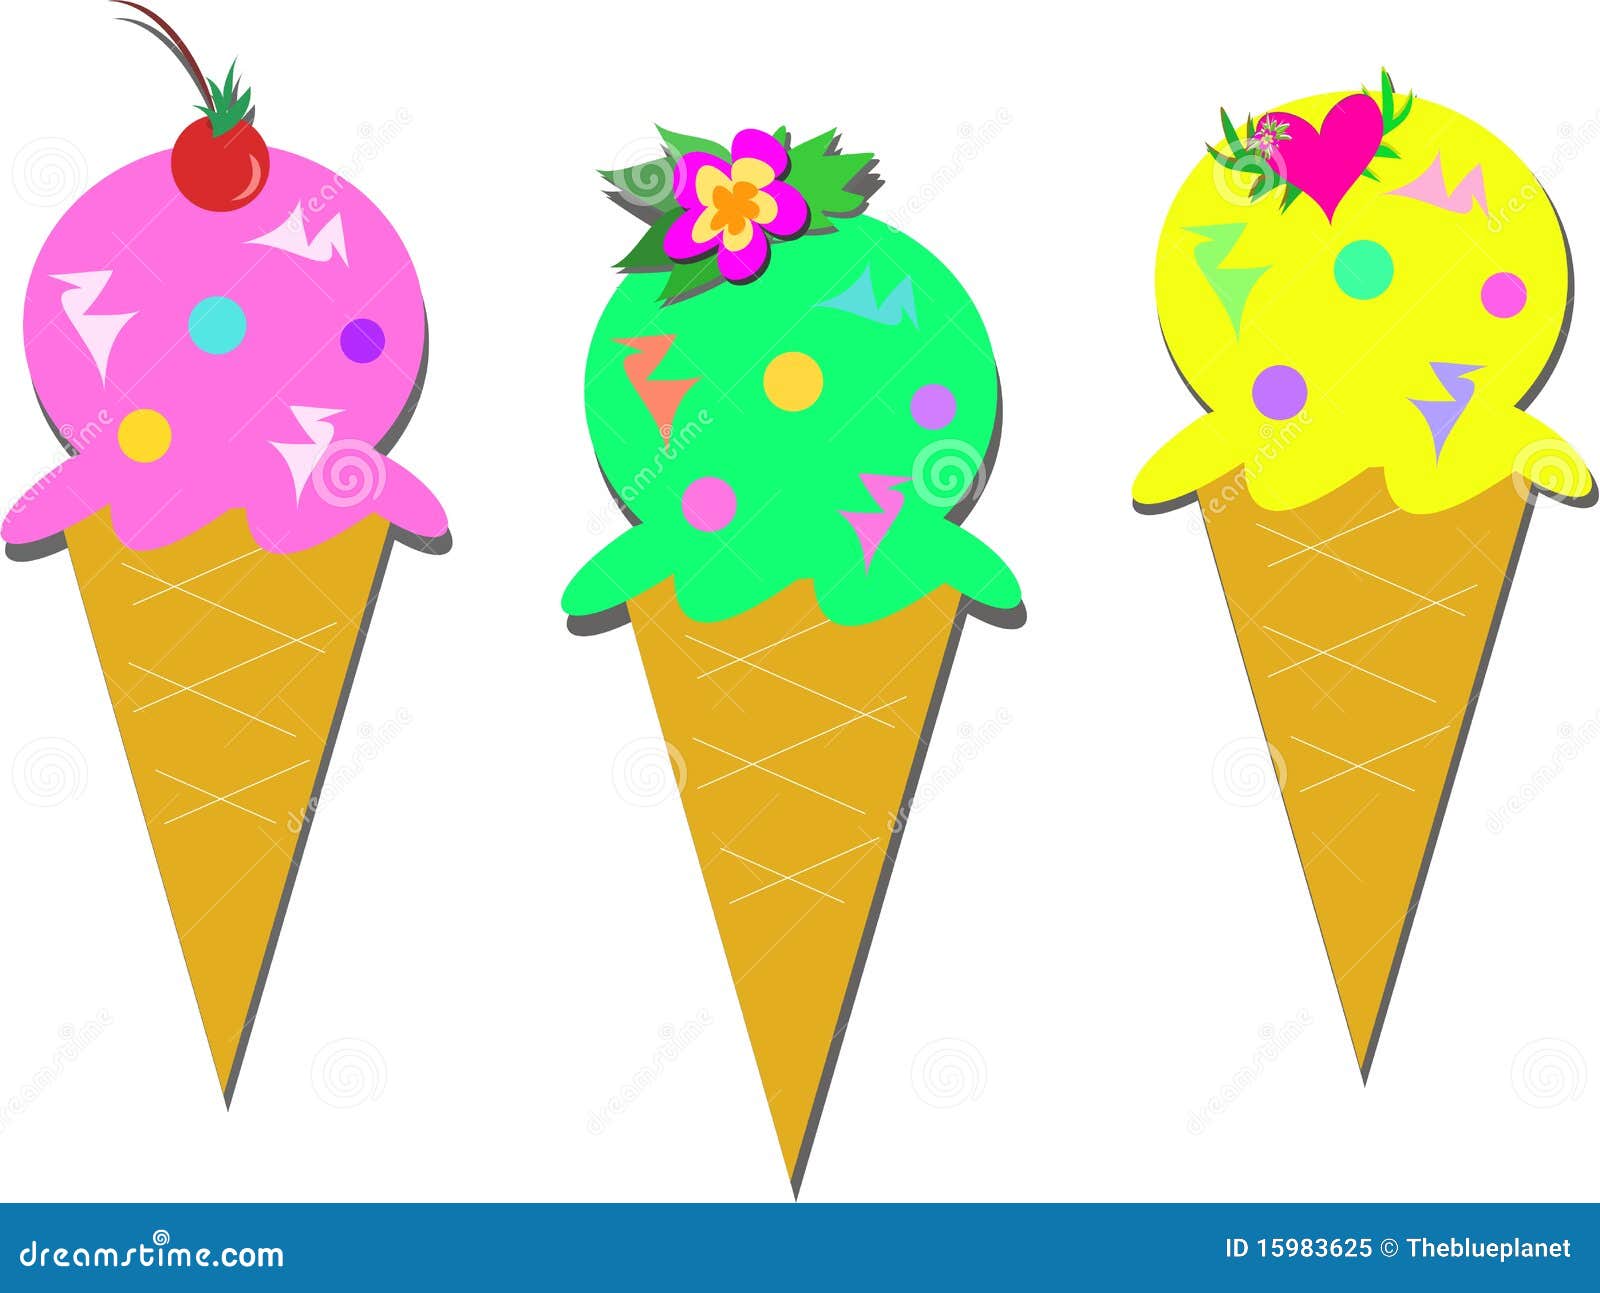 3-ice-cream-cones-clip-art-royalty-free-illustration-cartoondealer